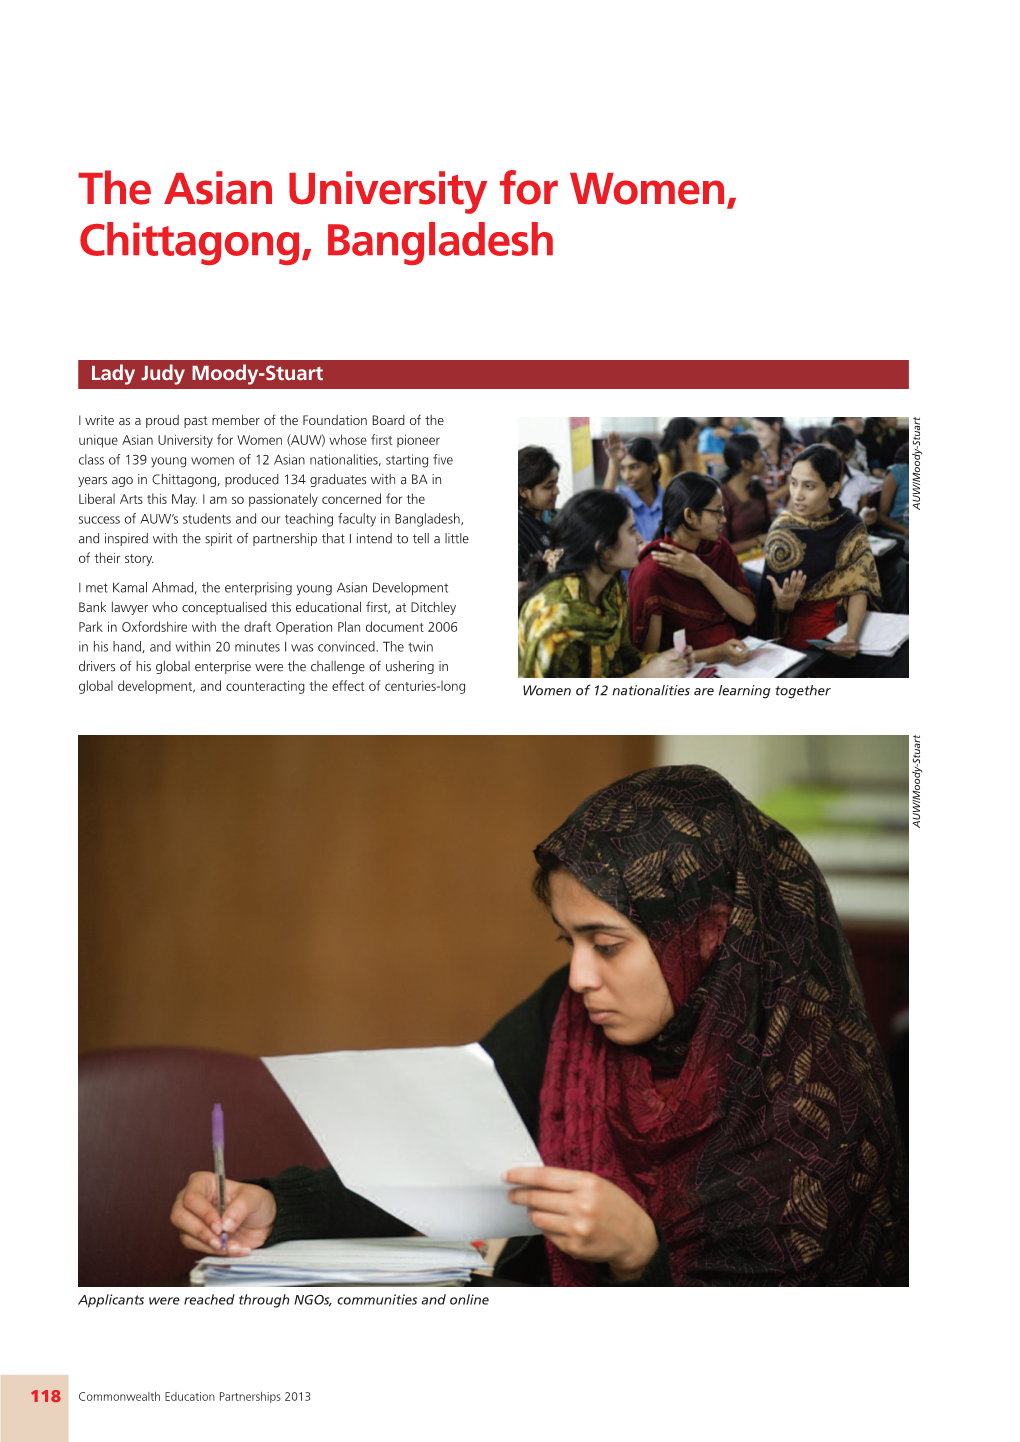 The Asian University for Women, Chittagong, Bangladesh